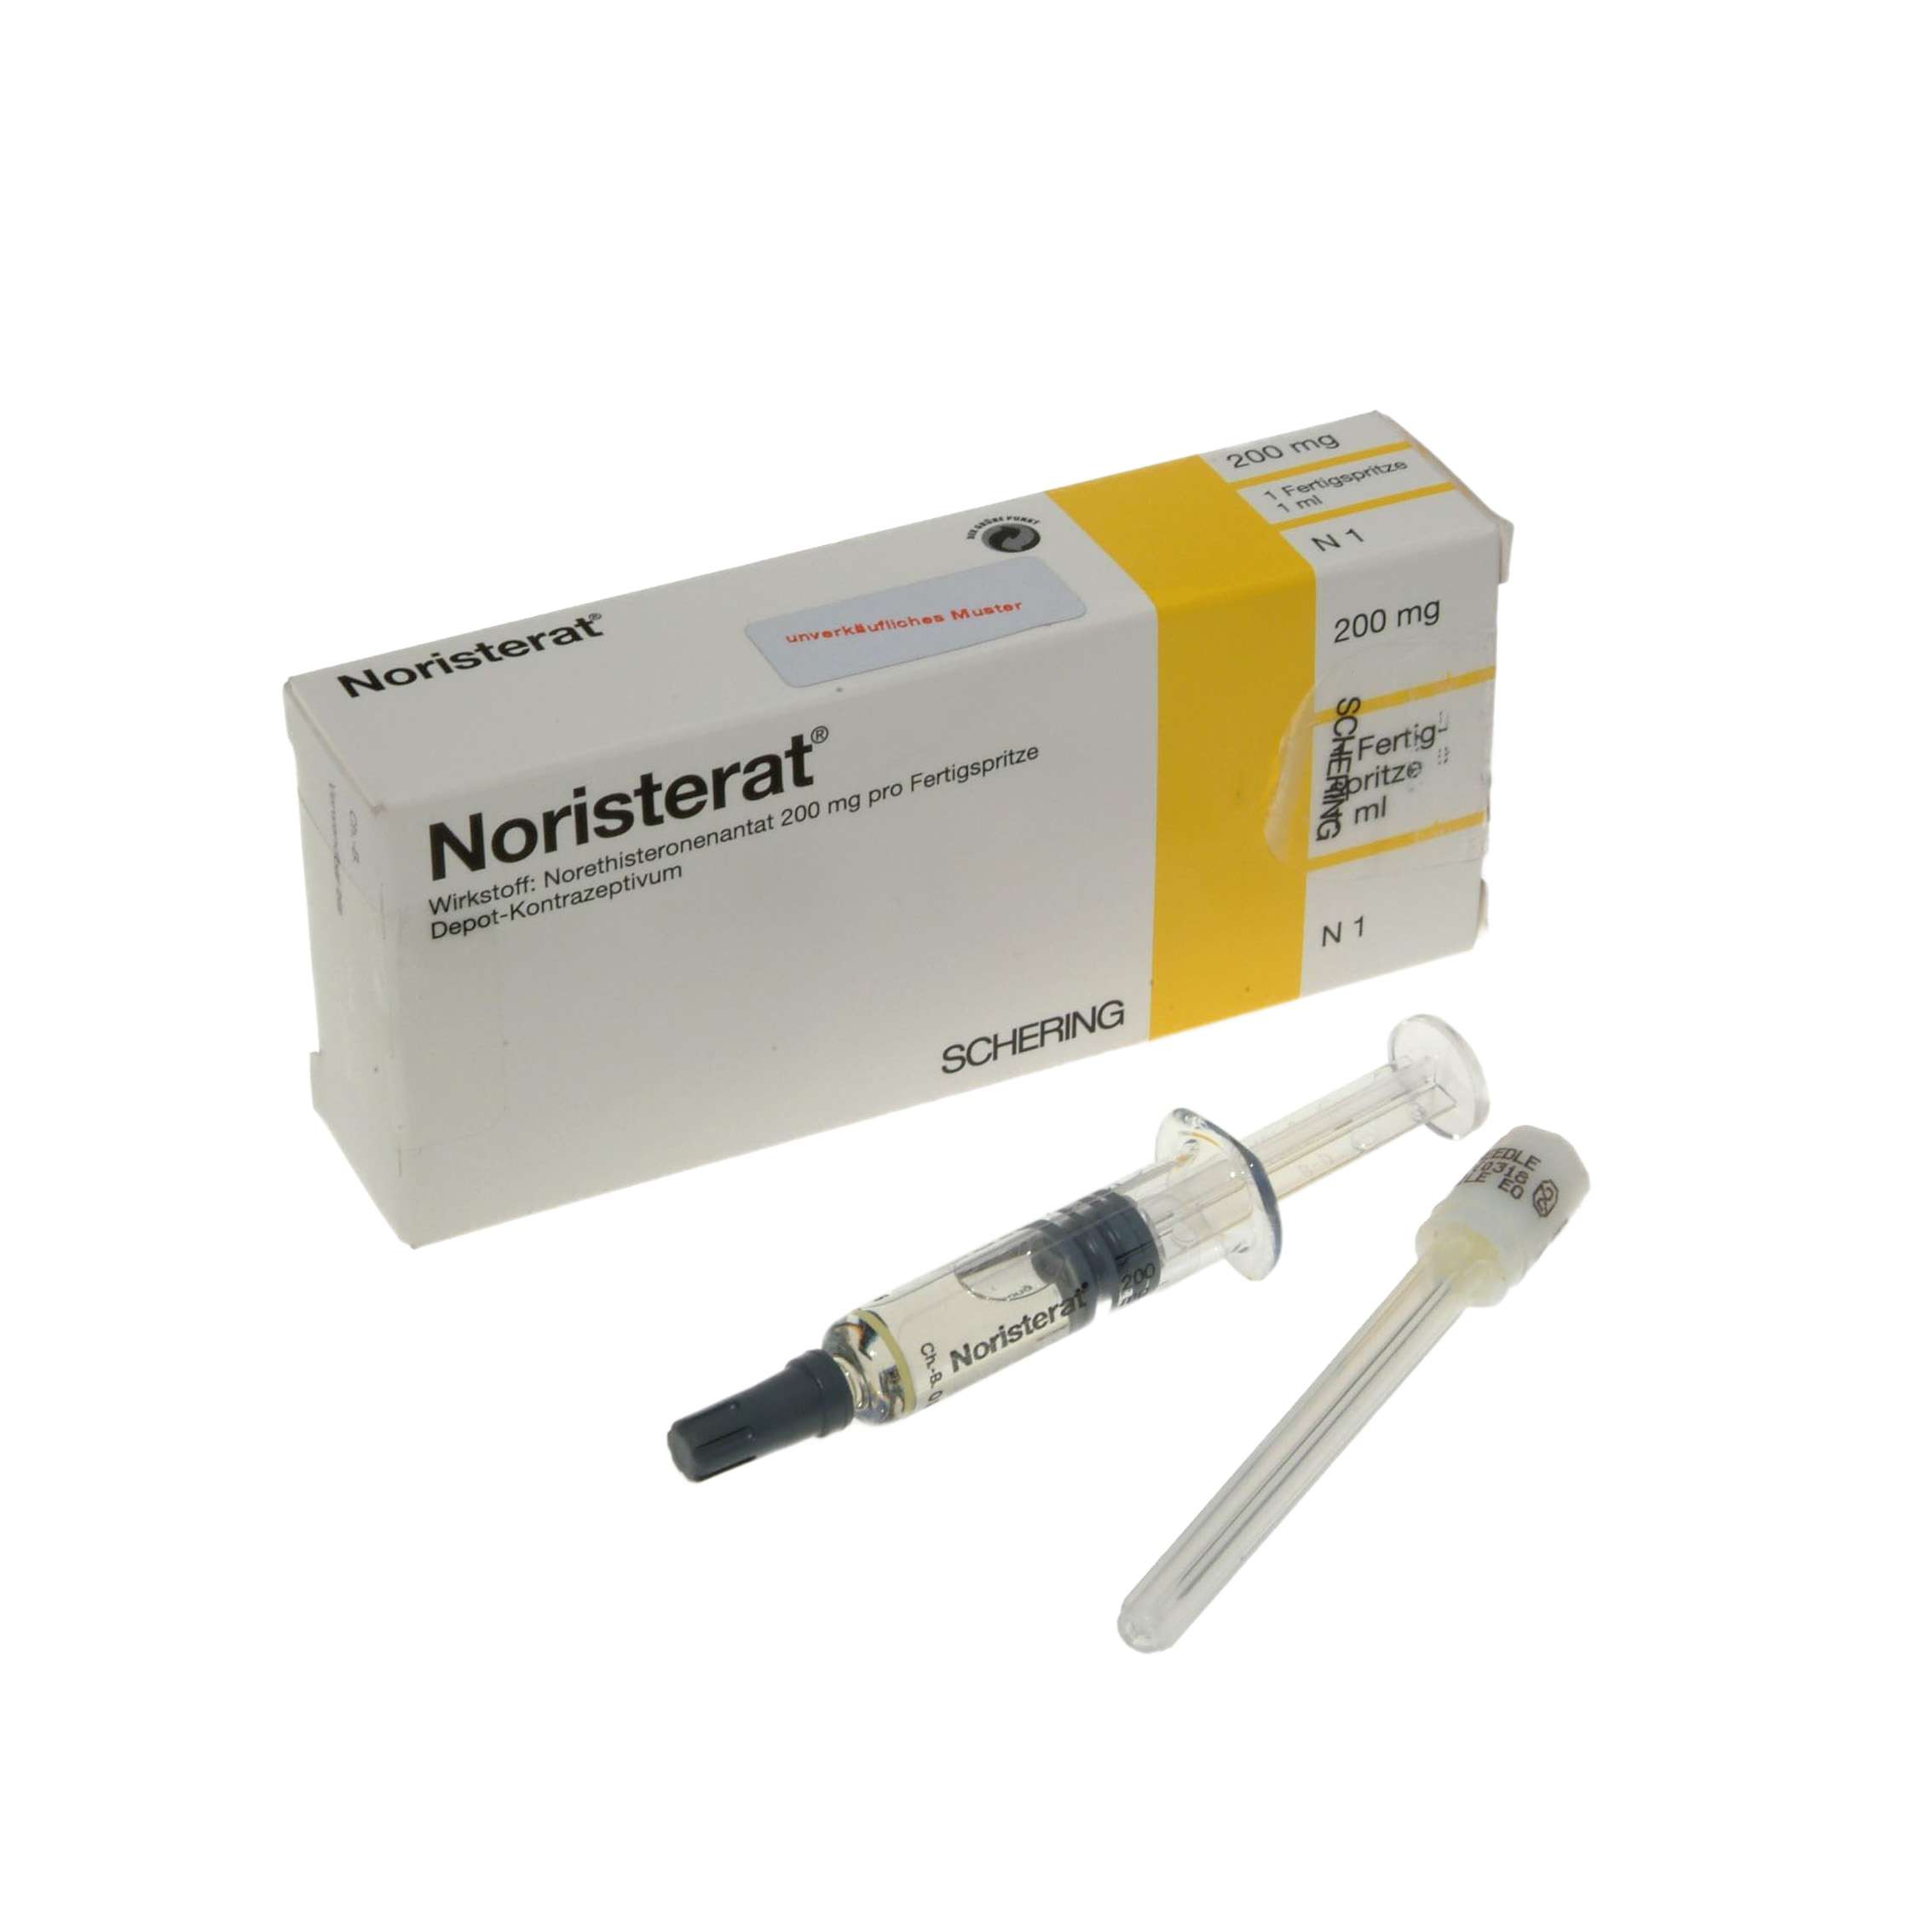 Noristerat injection